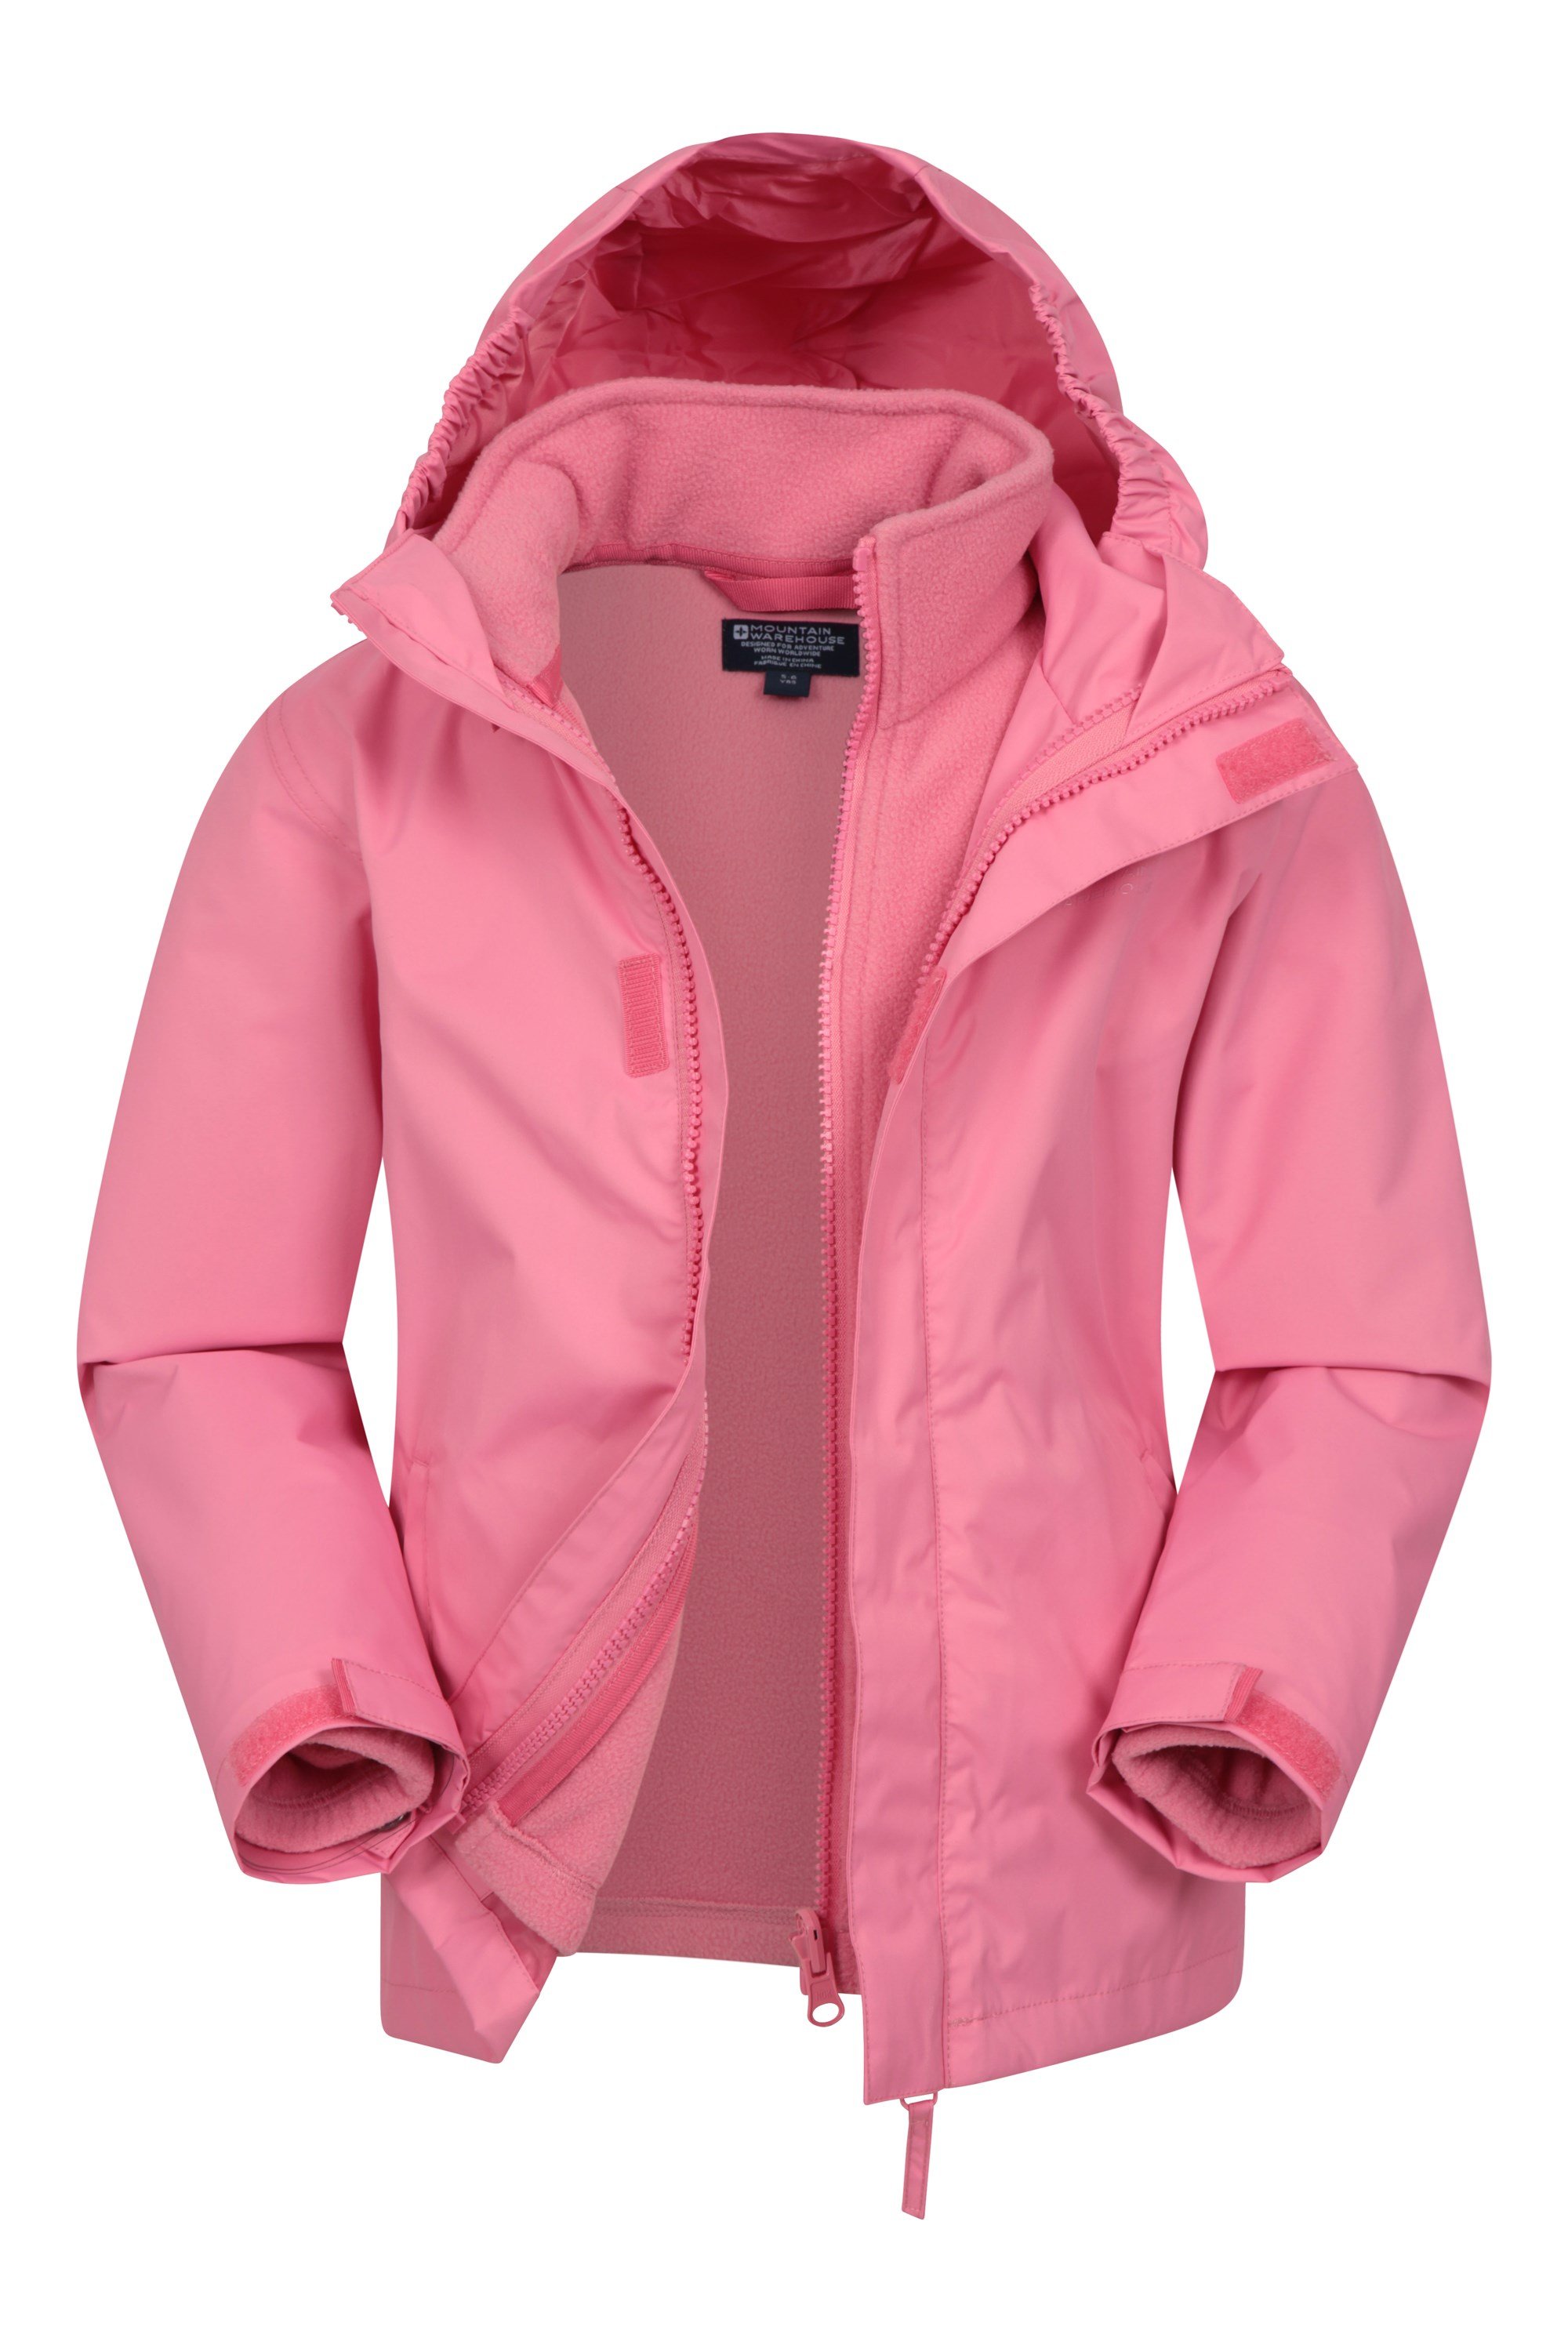 Mountain Warehouse red waterproof fleece lined mountain warehouse coat jacket 11-12 boys girls 